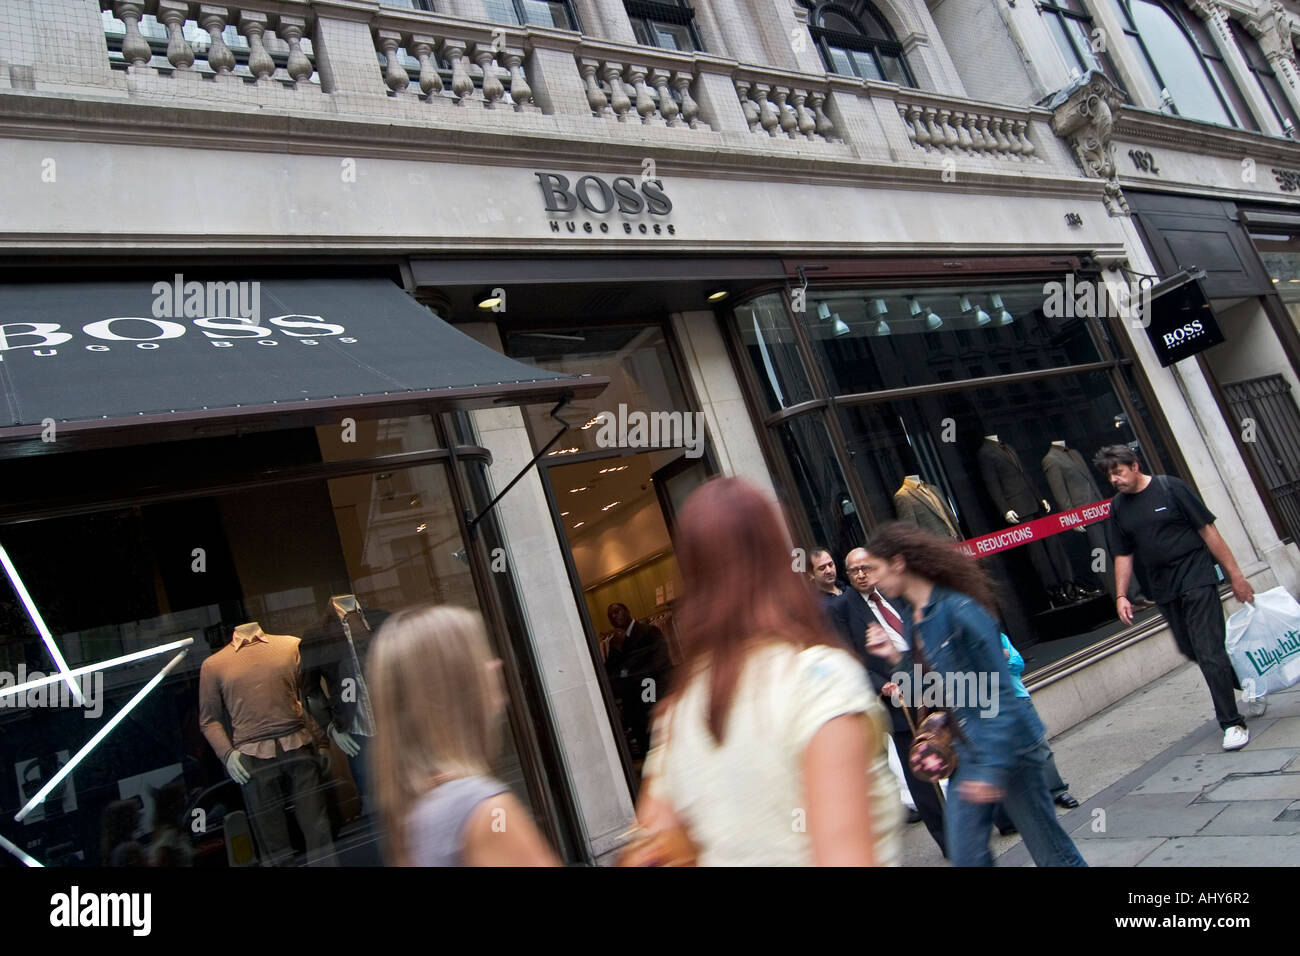 Hugo Boss Designer-Kleidung Store auf Regent Street in London  Stockfotografie - Alamy